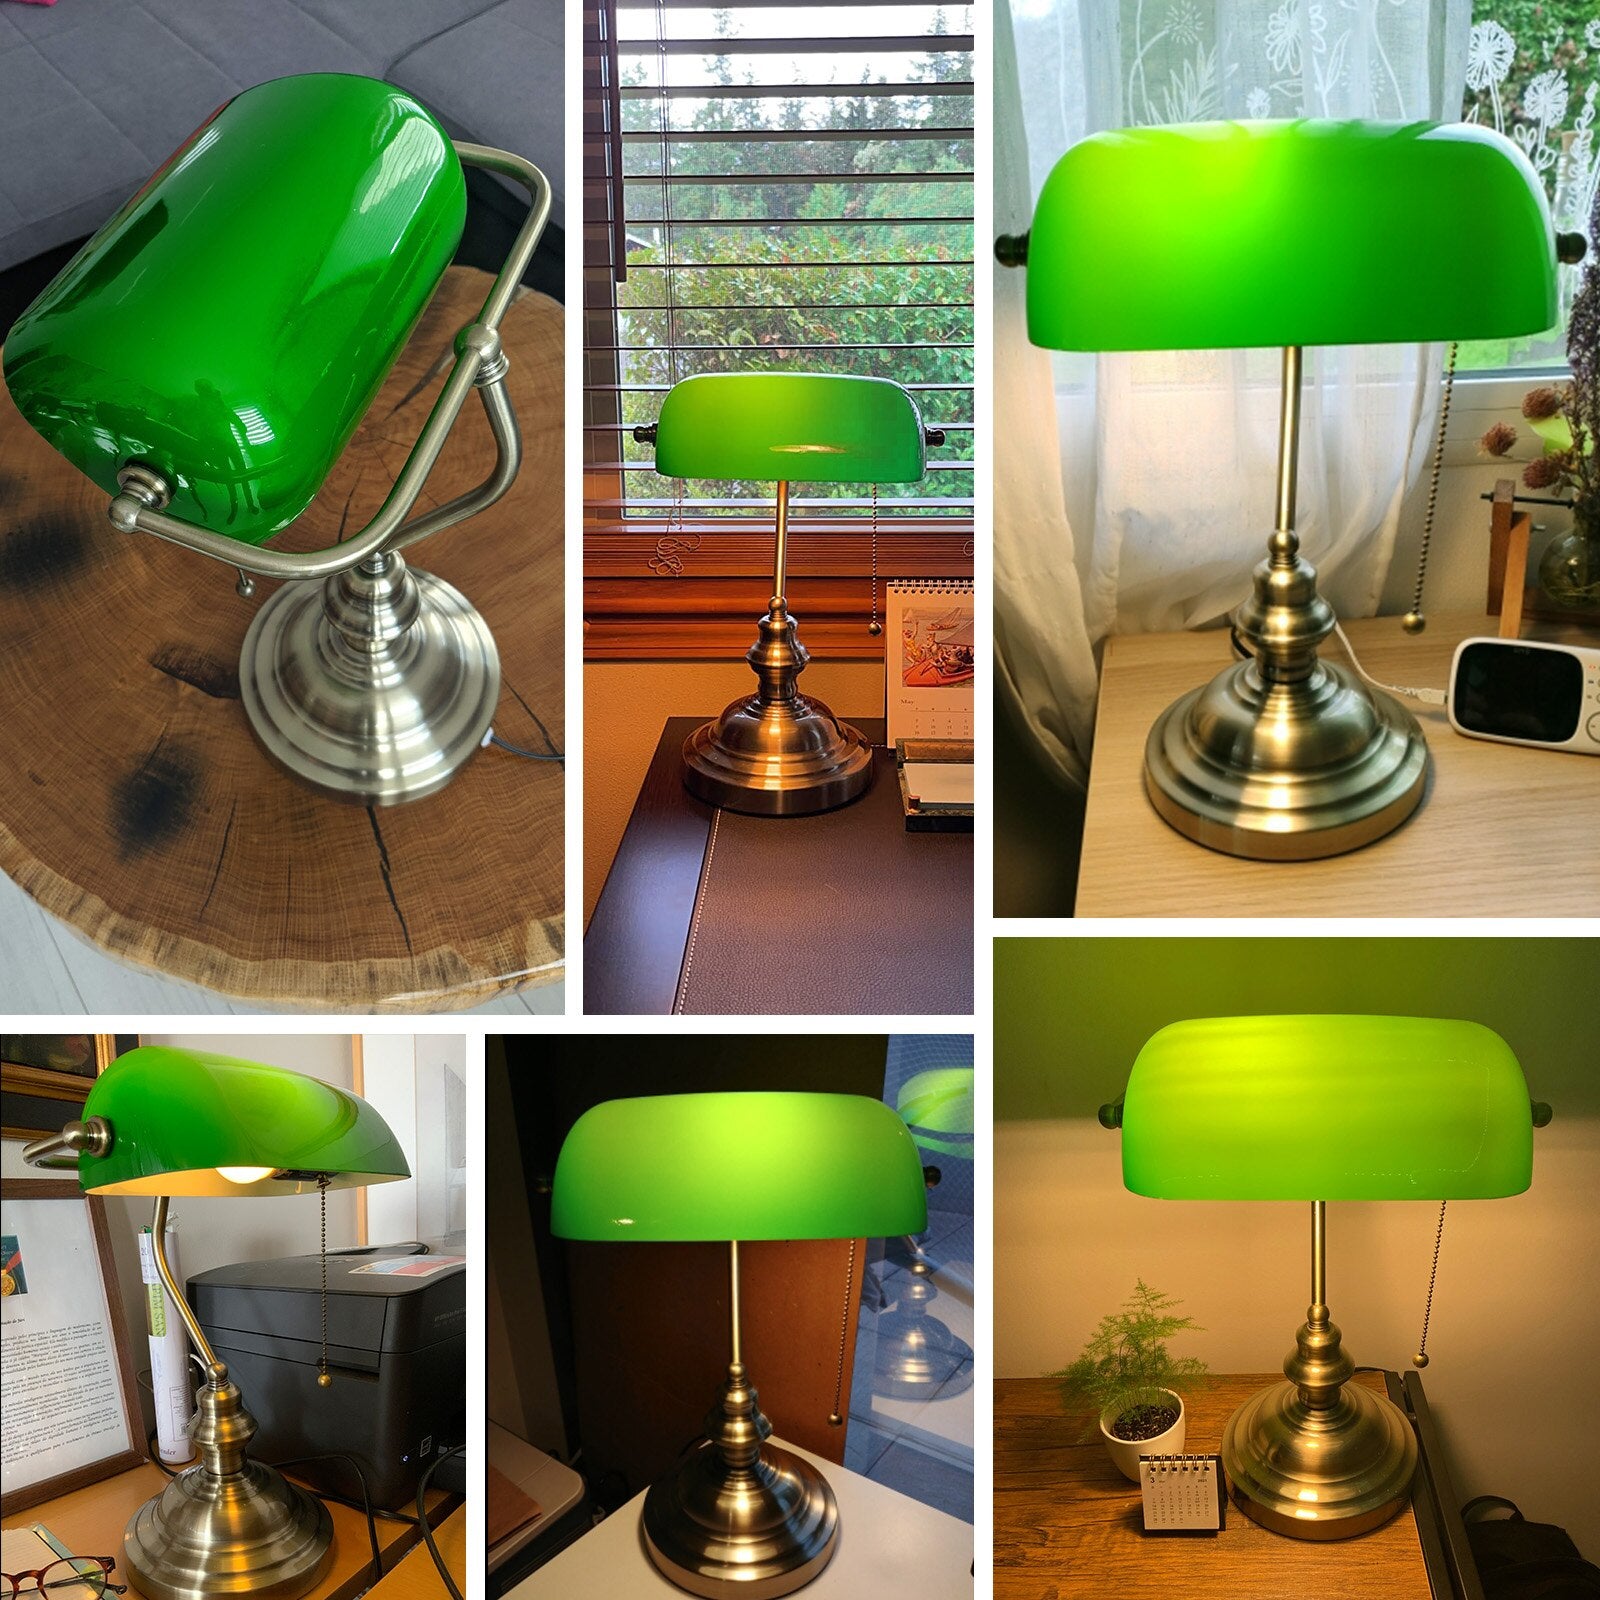 Emerald Banker - Green Glass Desk Lamp